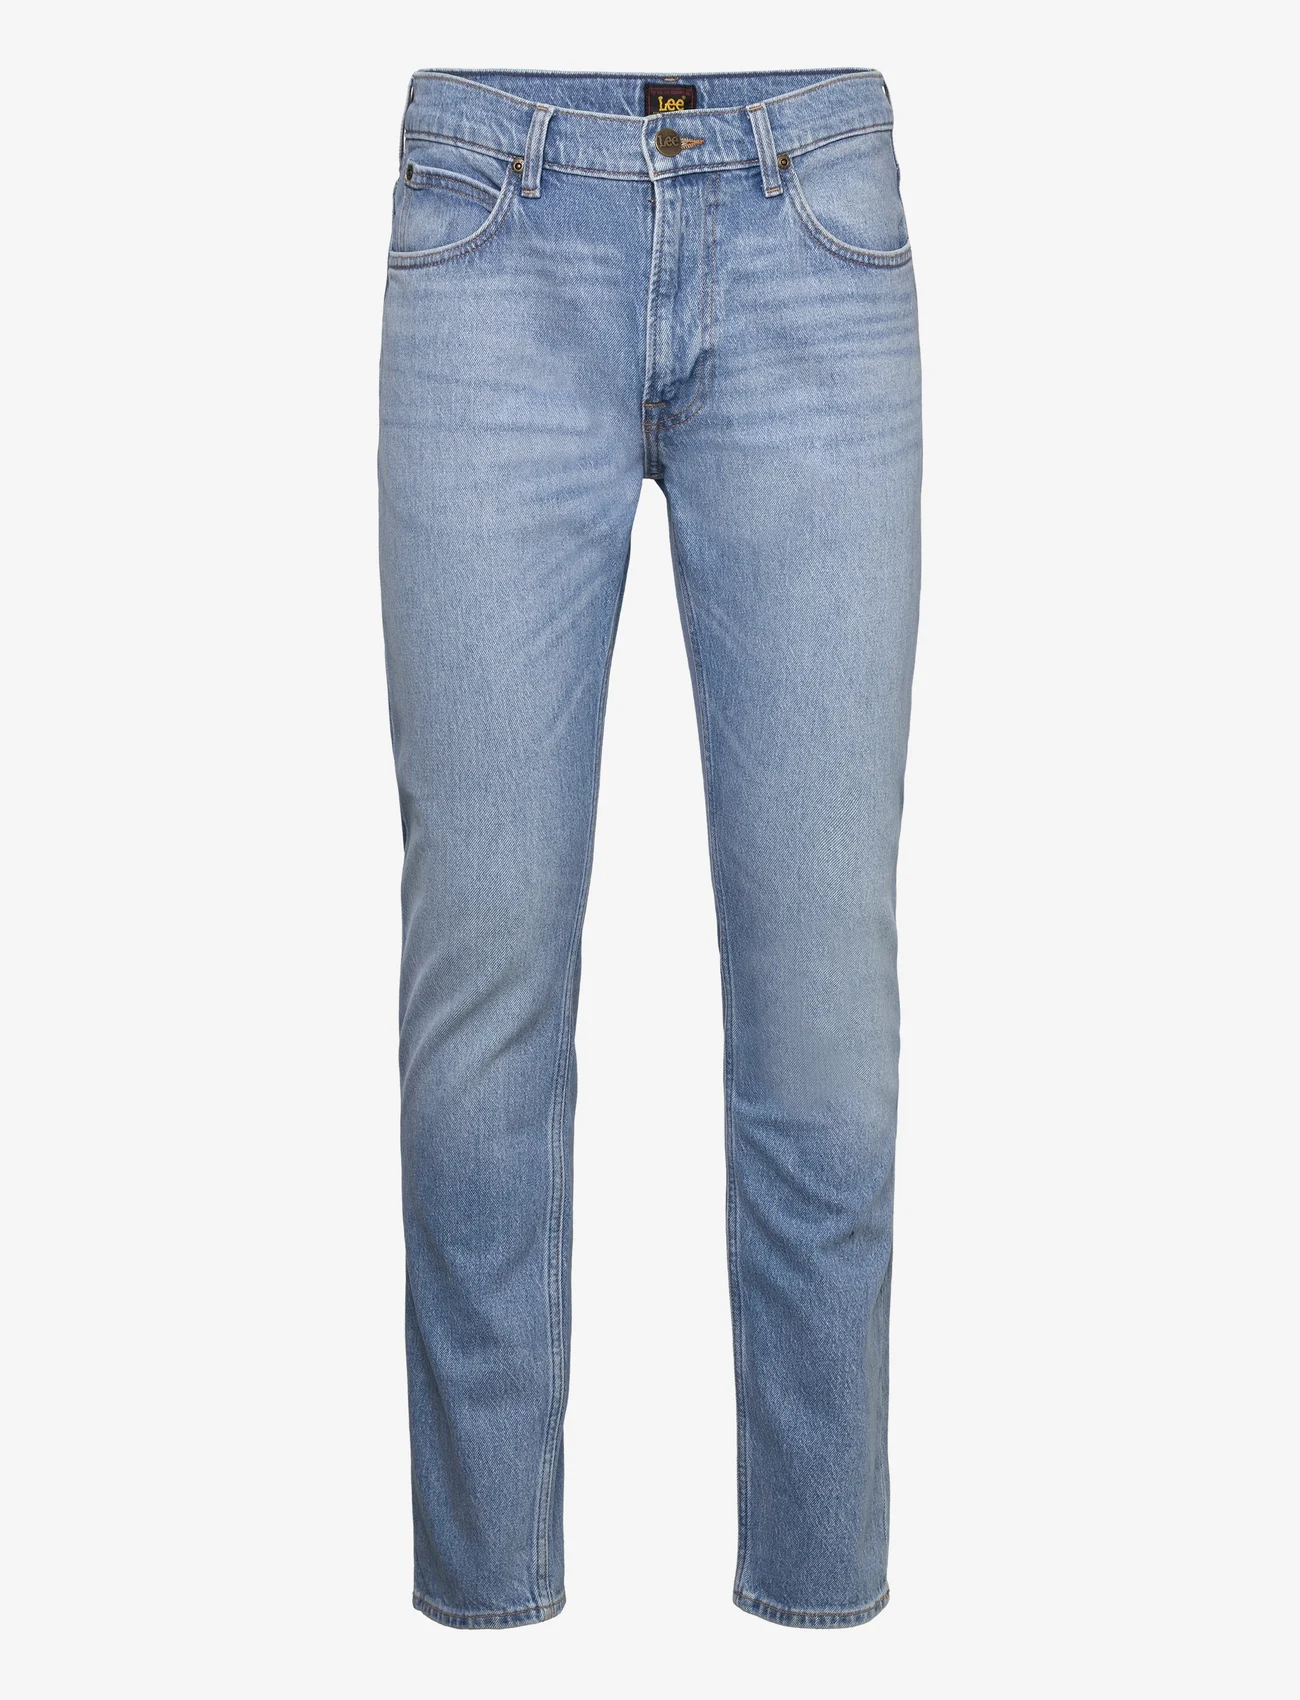 Lee Jeans - RIDER - slim jeans - light seabreeze - 0